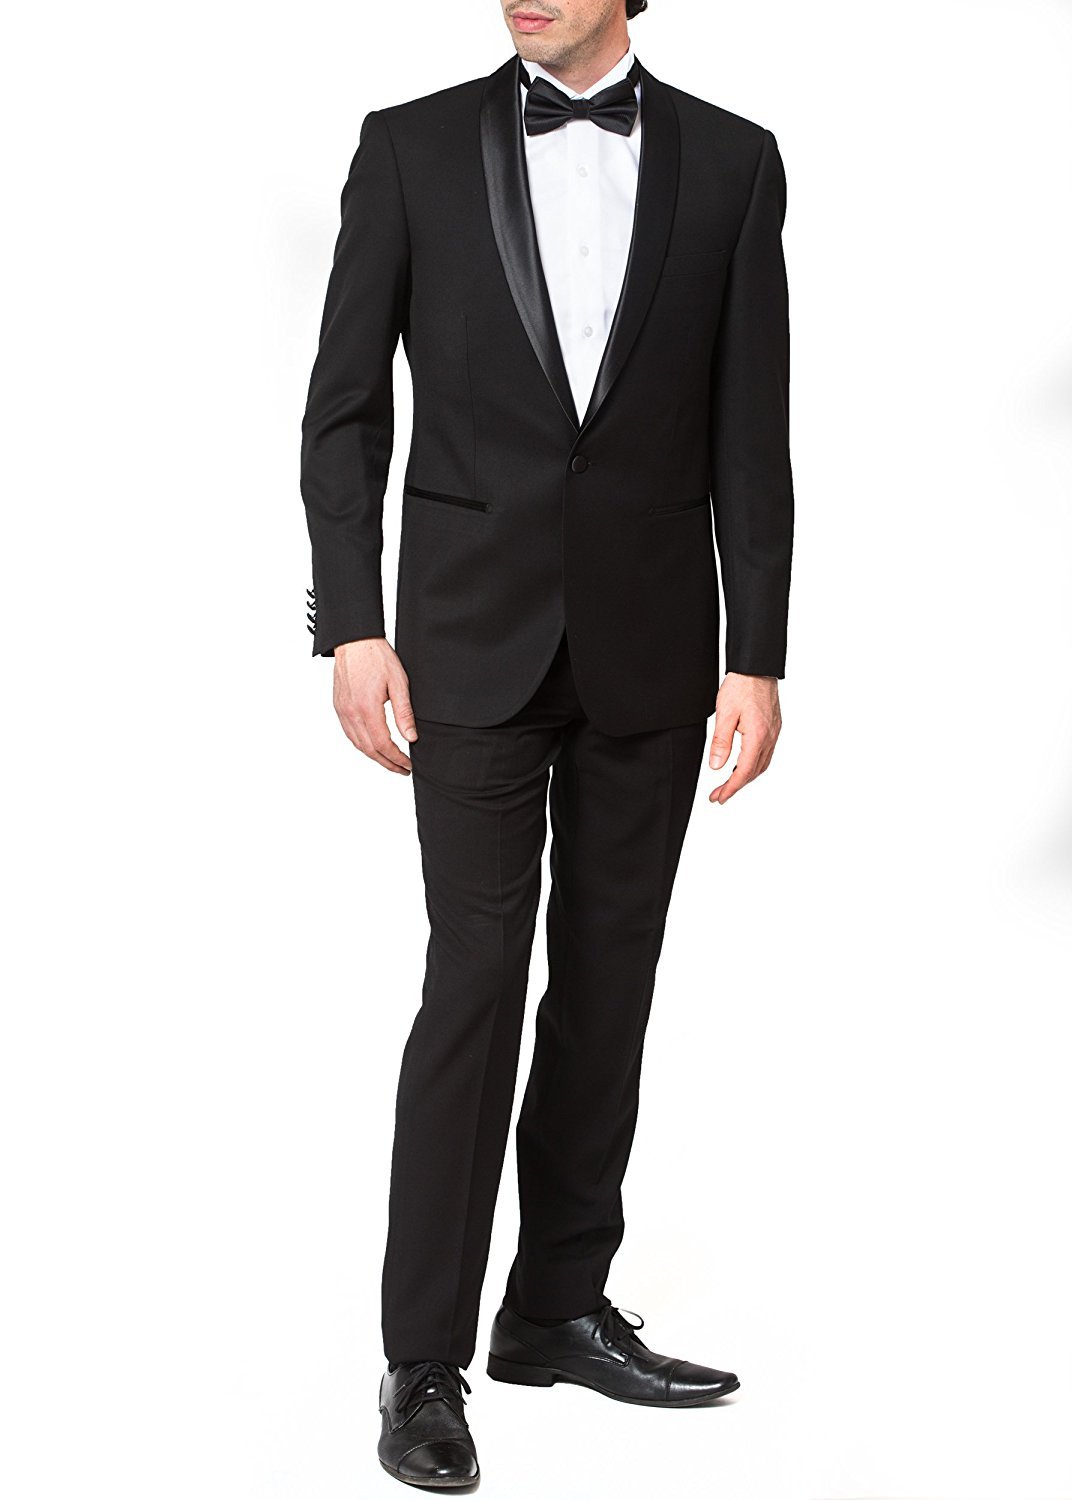 Giorgio Fiorelli Men’s G47815/1 One Button Modern Fit Two-Piece Shawl Collar Tuxedo Suit Set - Black - 44S - image 2 of 5